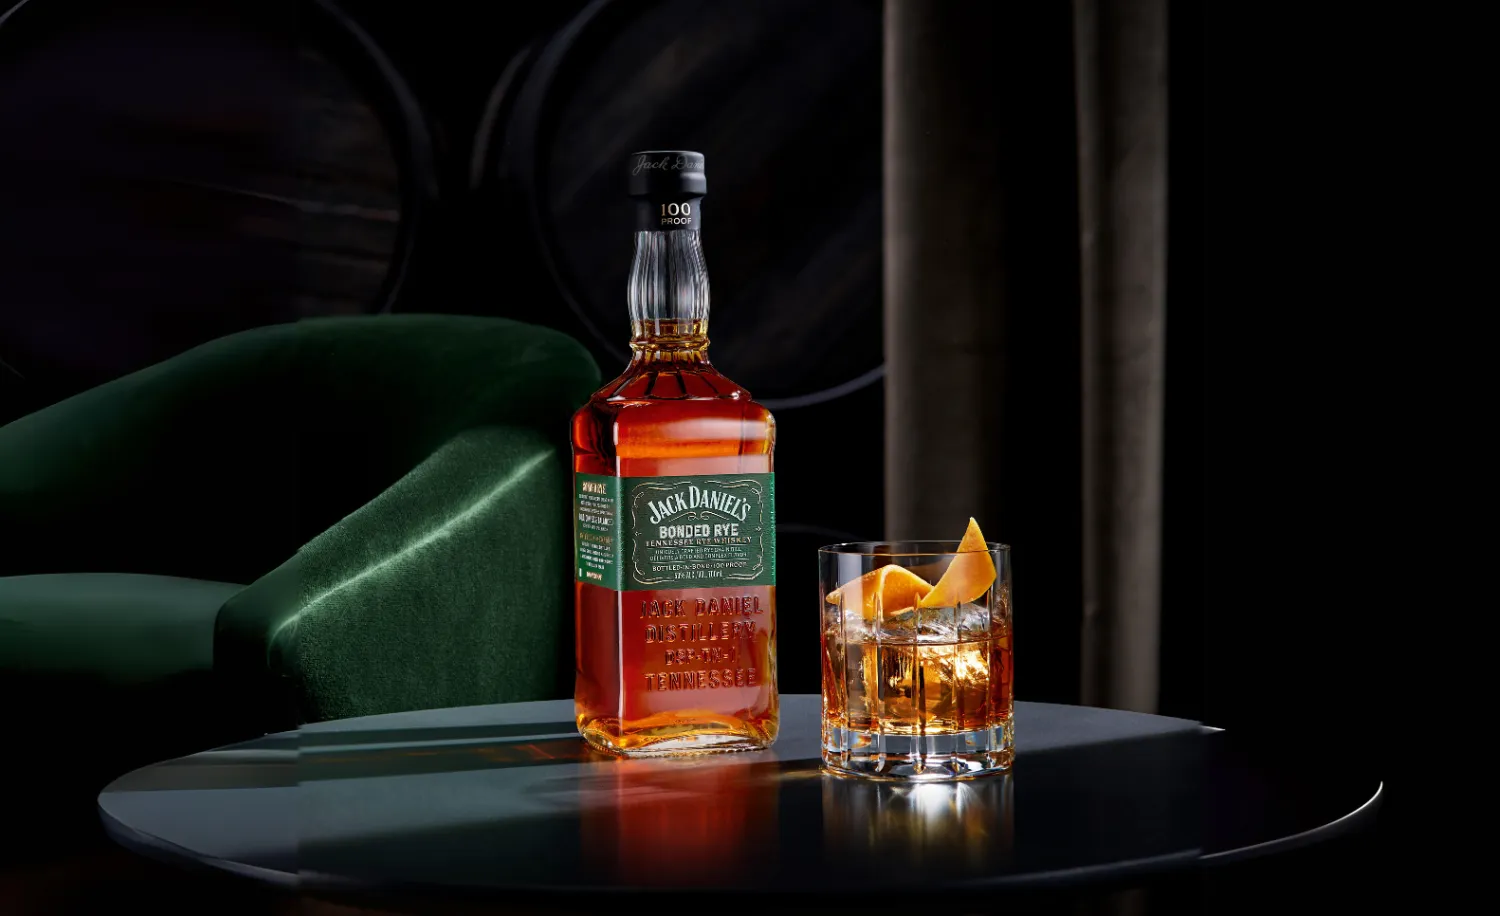 Jack Daniel’s releases bonded rye whisky